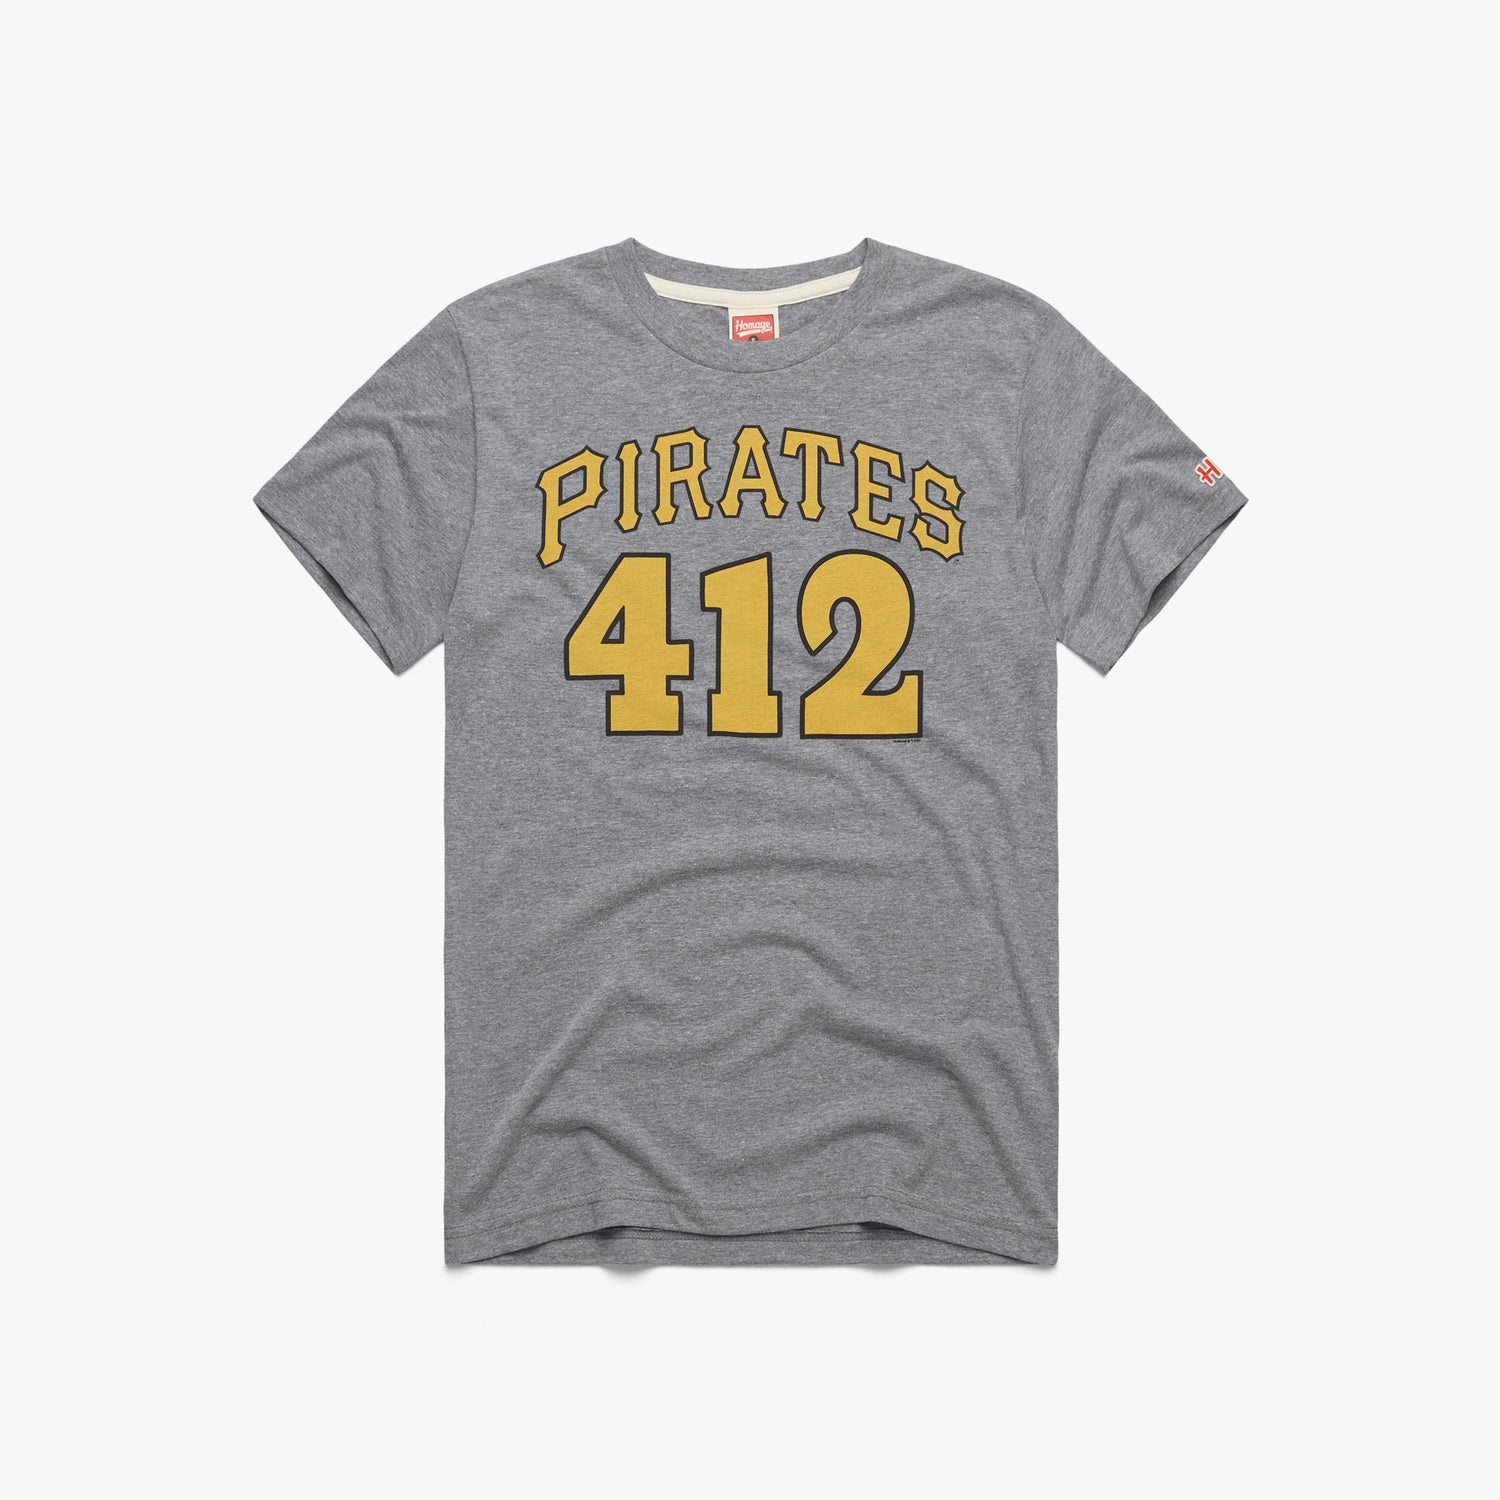 shop 412 pirates jersey